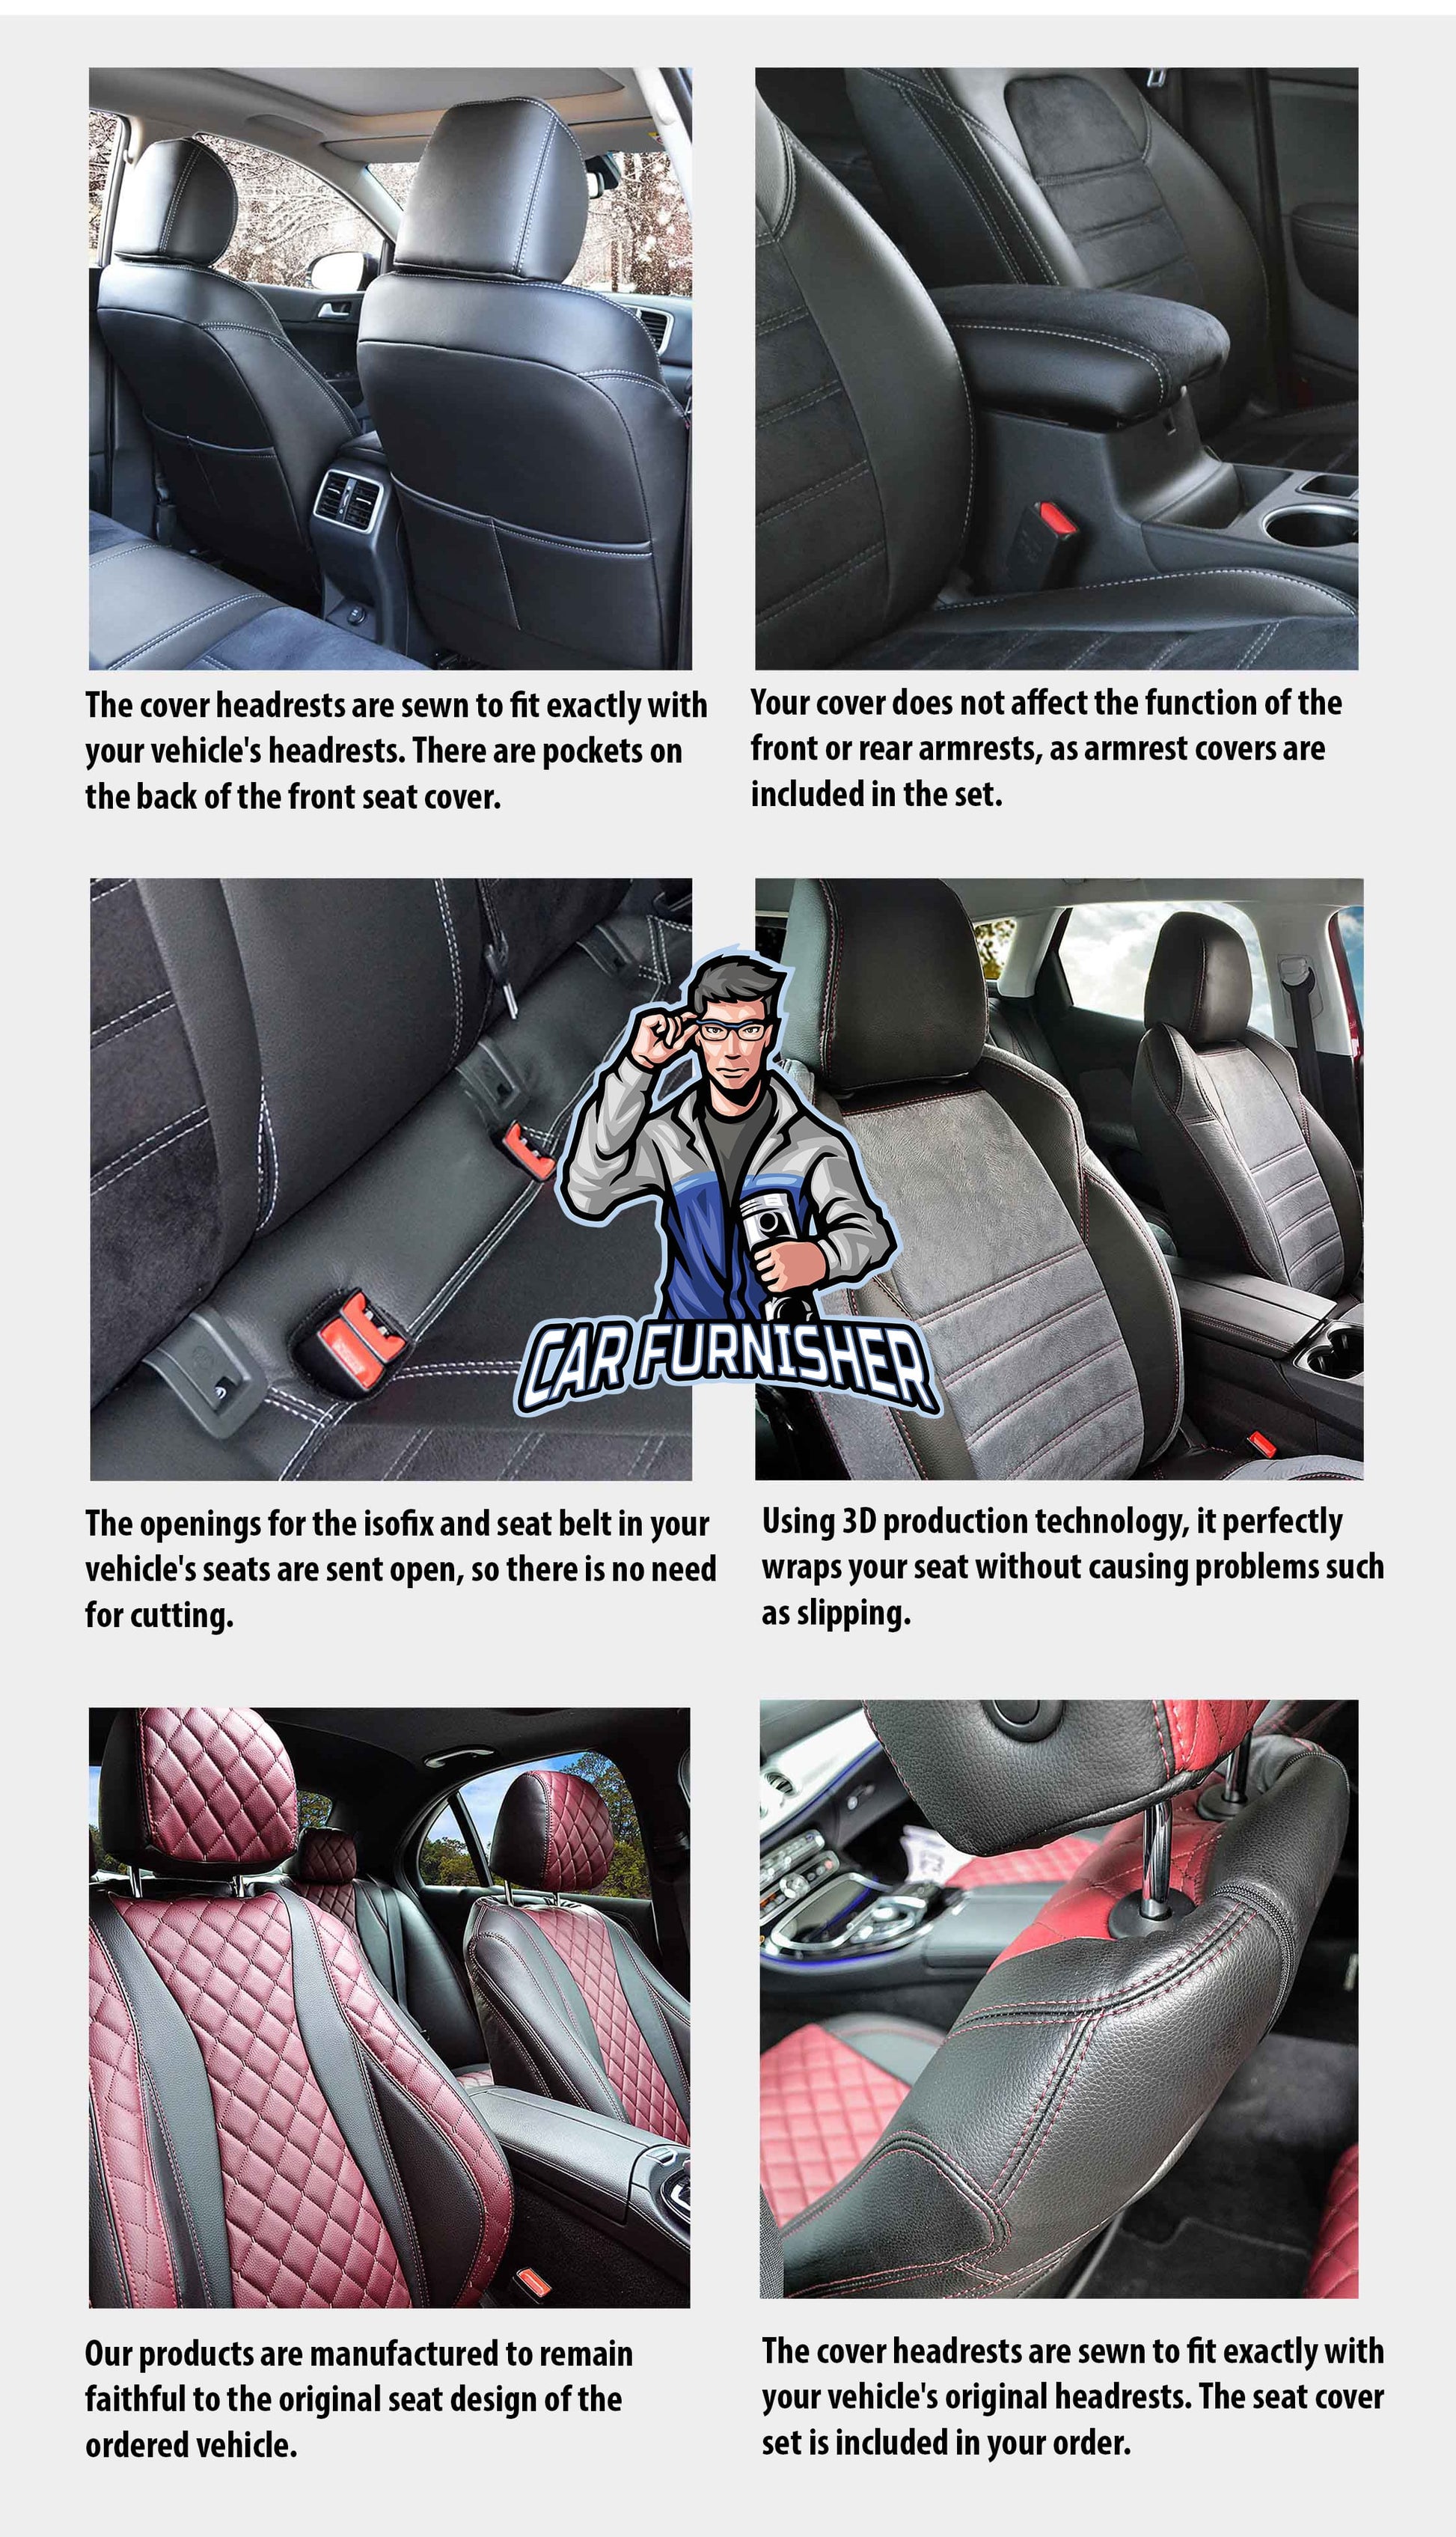 Kia Bongo Seat Covers Istanbul Leather Design Beige Leather